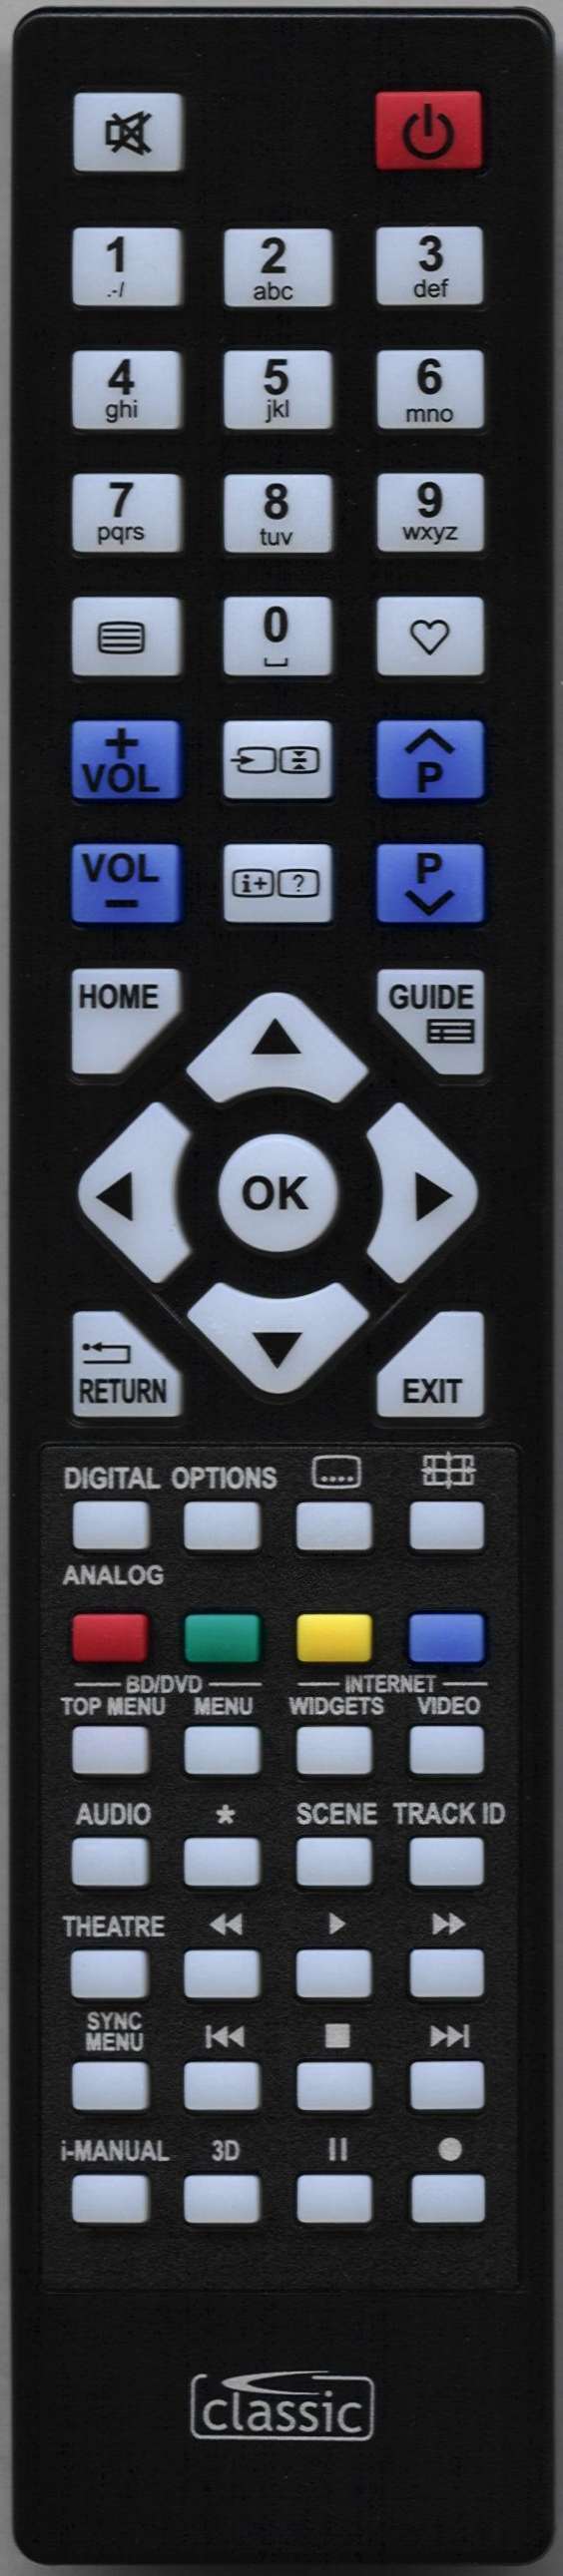 SONY KDL32EX501 Remote Control